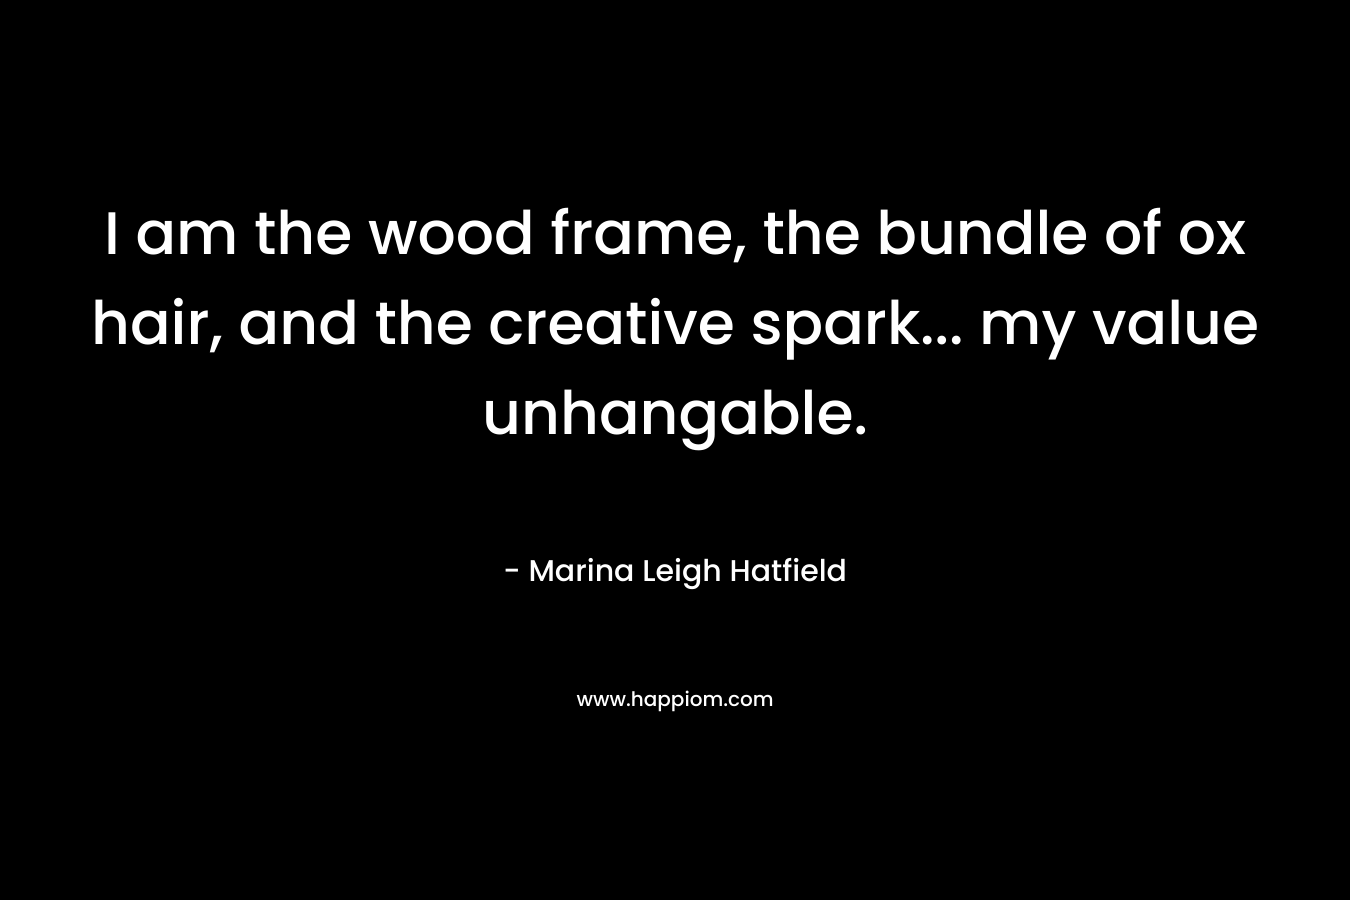 I am the wood frame, the bundle of ox hair, and the creative spark... my value unhangable.